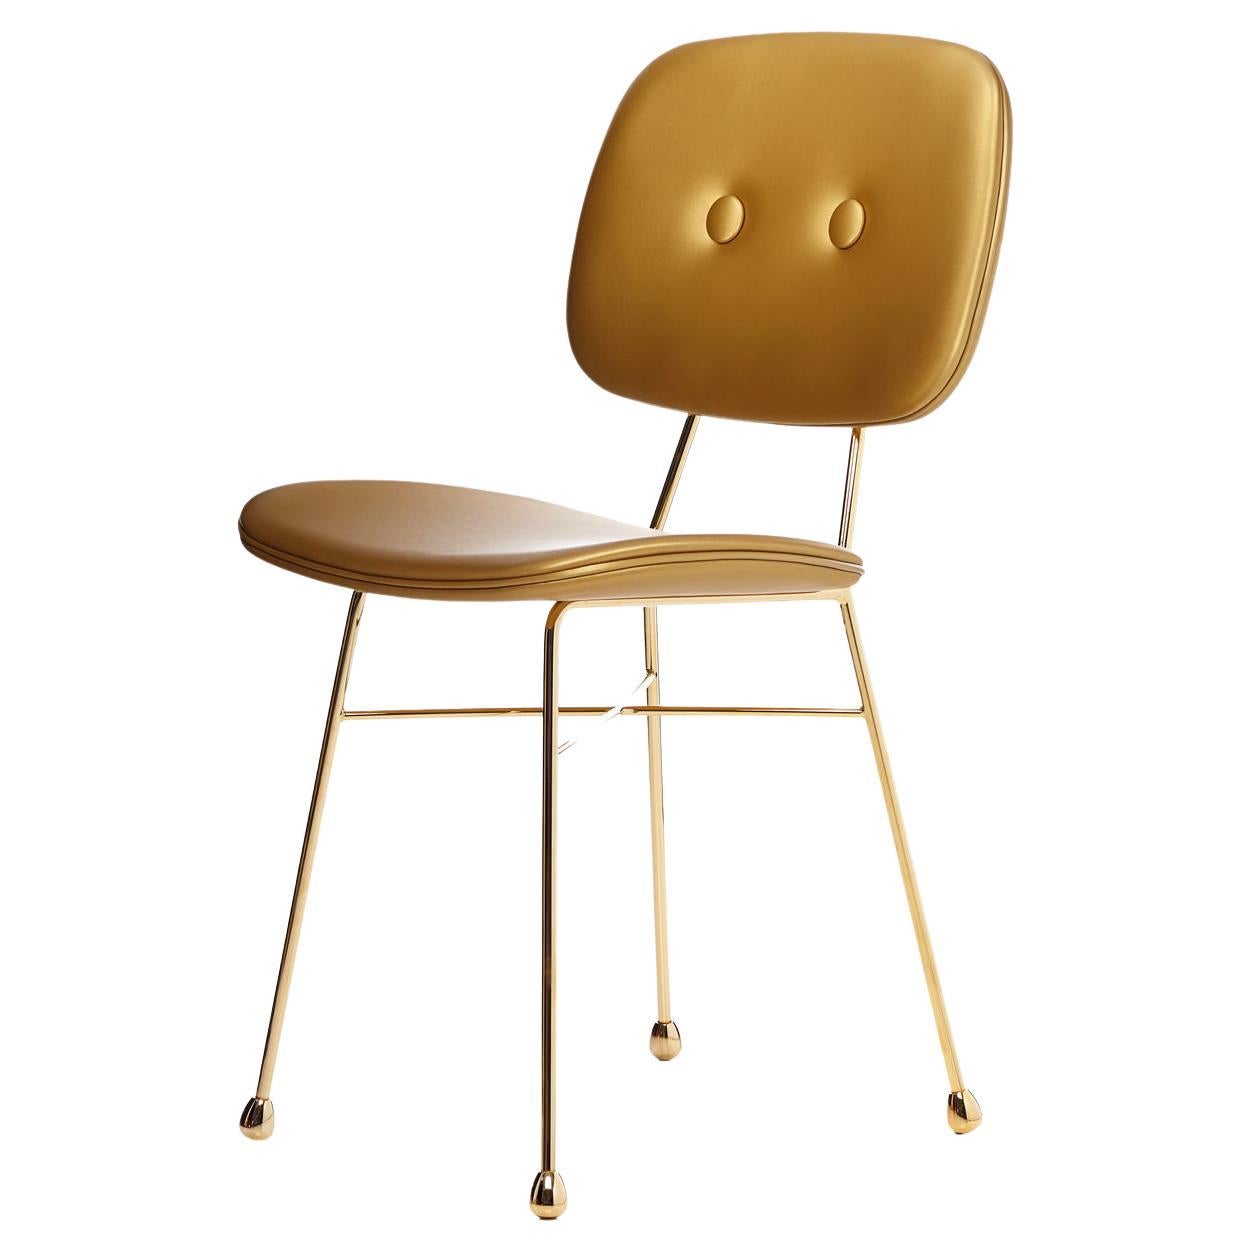 Moooi The Golden Chair in Matt Golden Steel Frame and Upholstery For Sale